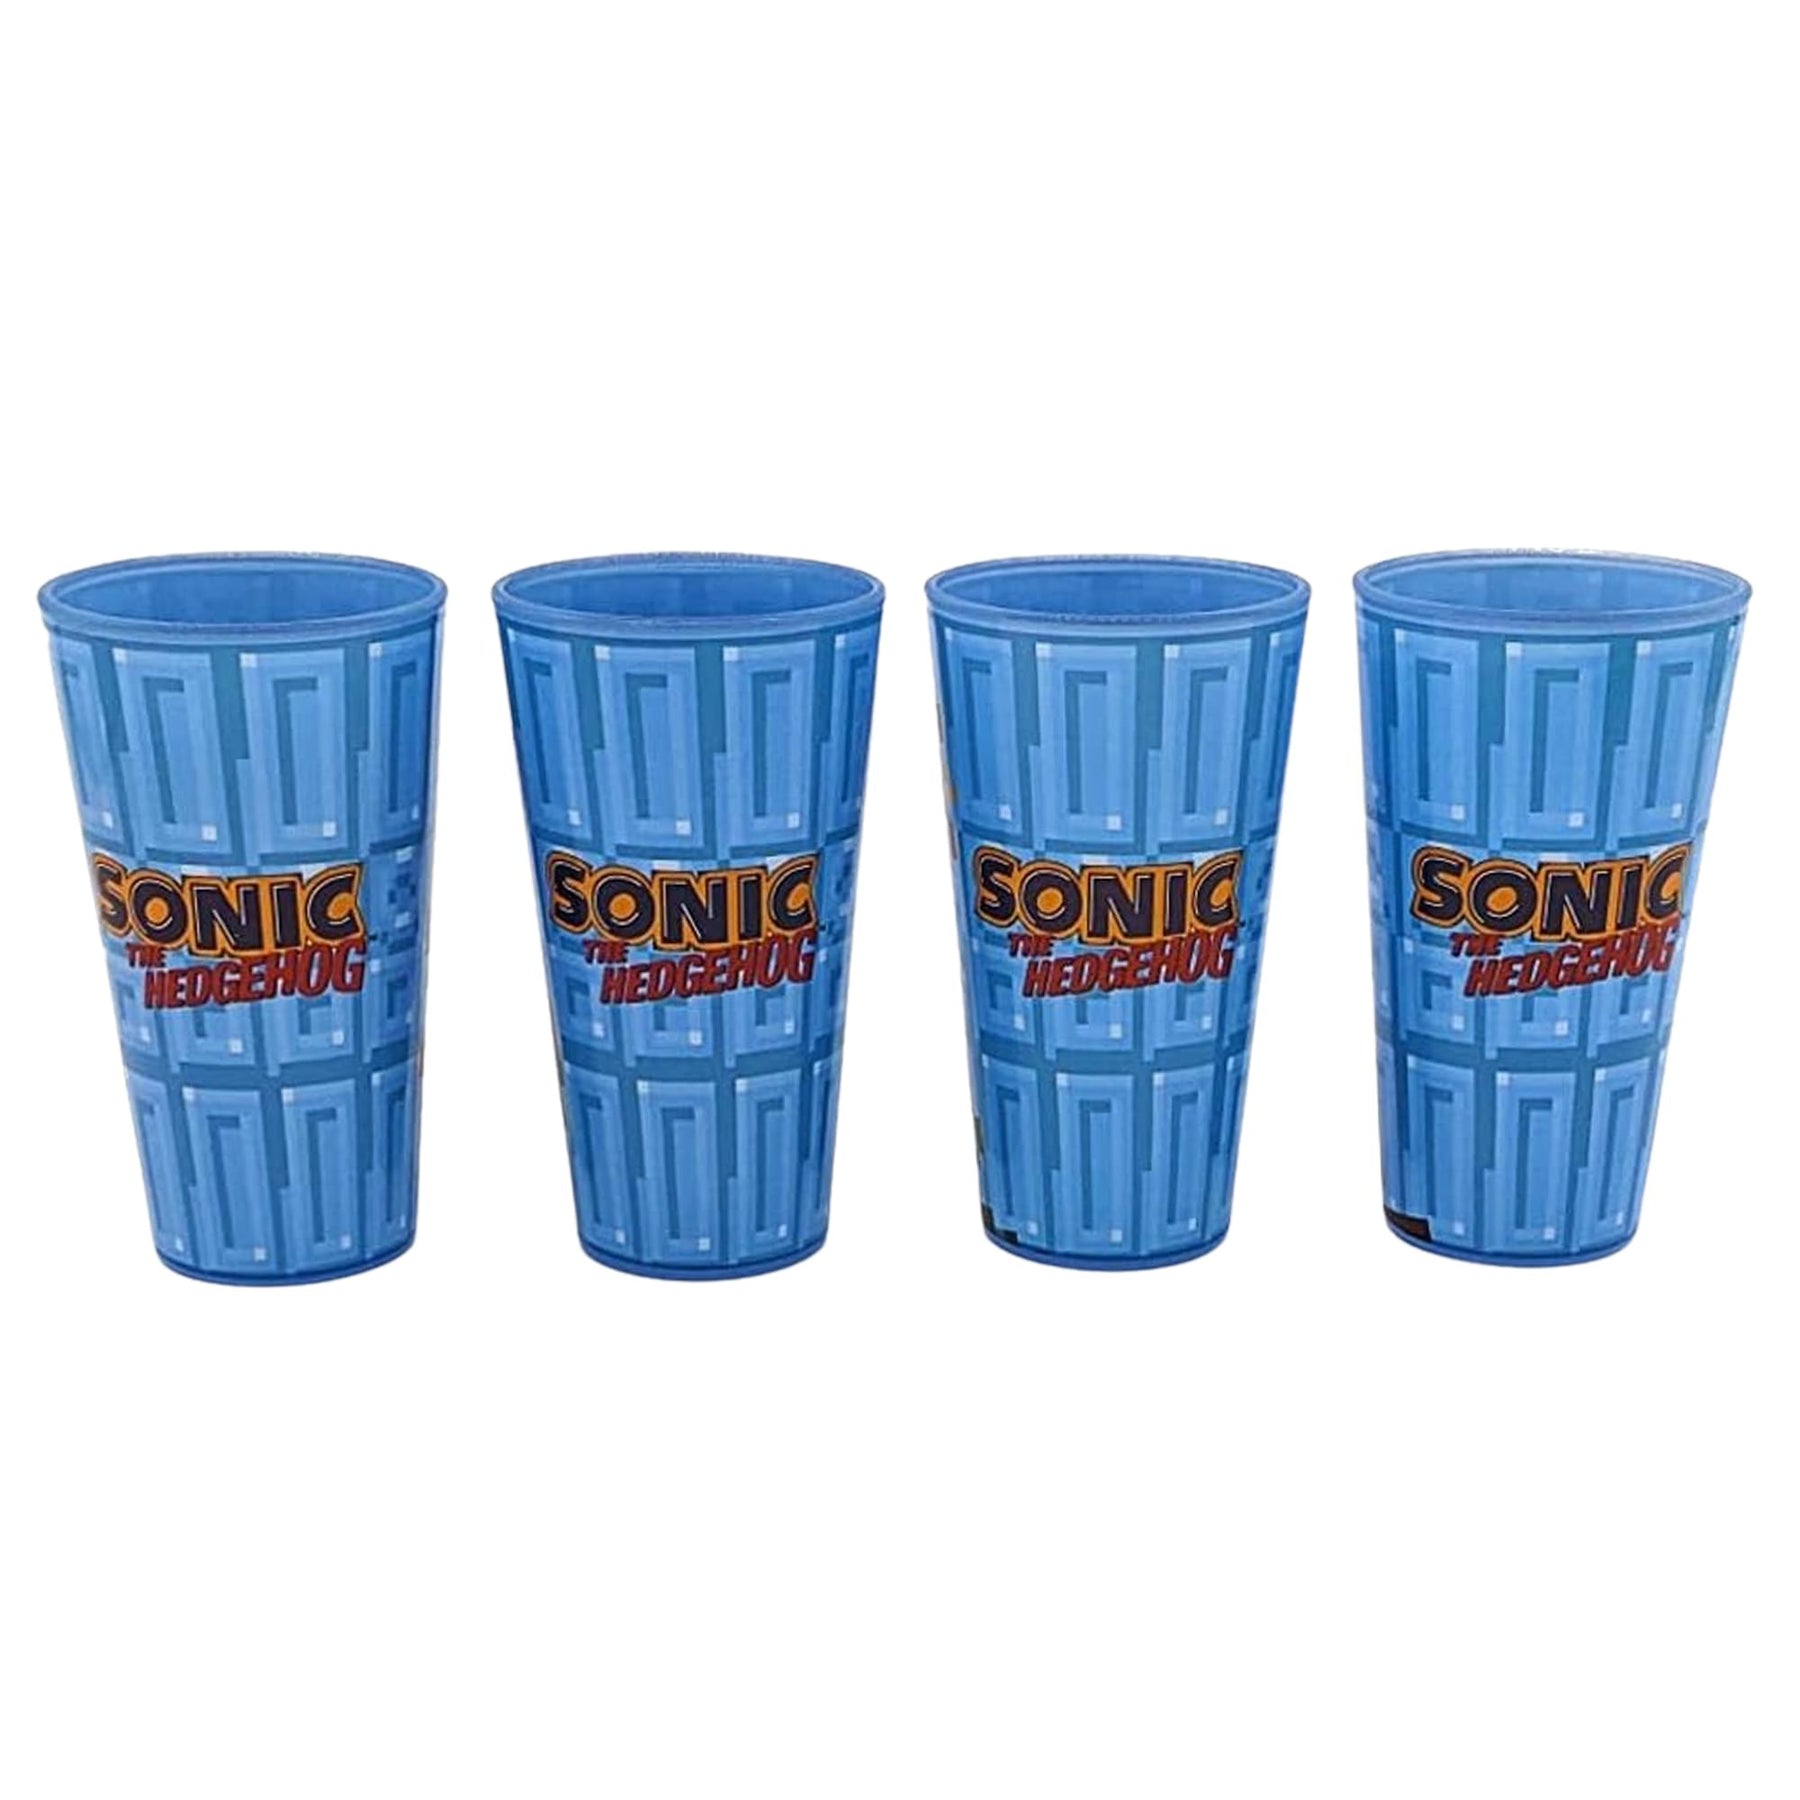 Sonic the Hedgehog Pivel Design 16 oz Glass Tumbler Cups | Set of 4